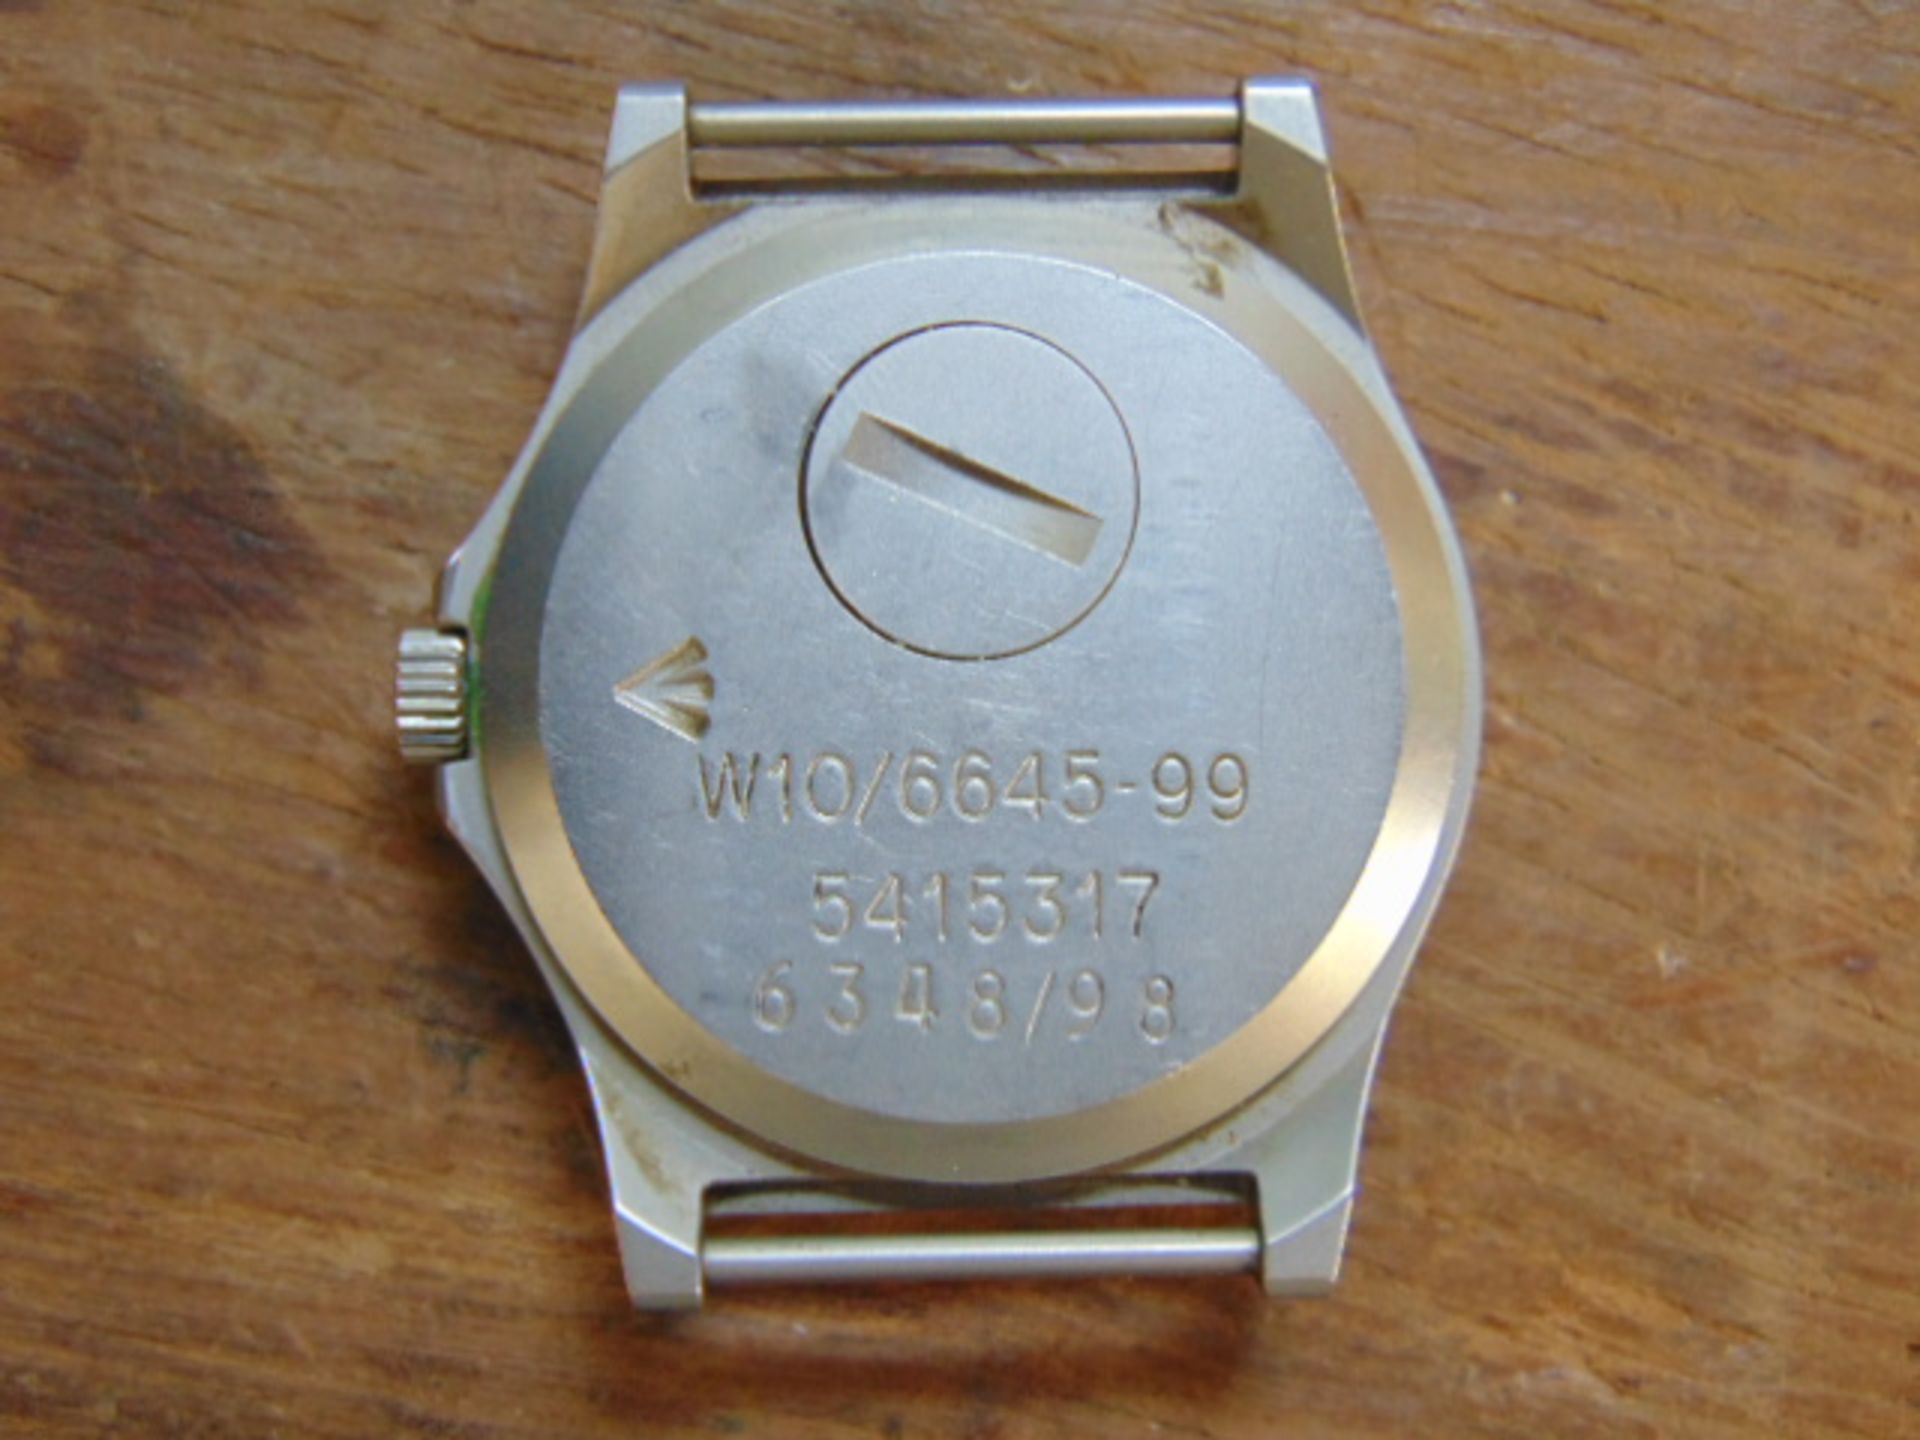 Genuine British Army, CWC Quartz Wrist Watch - Image 6 of 6